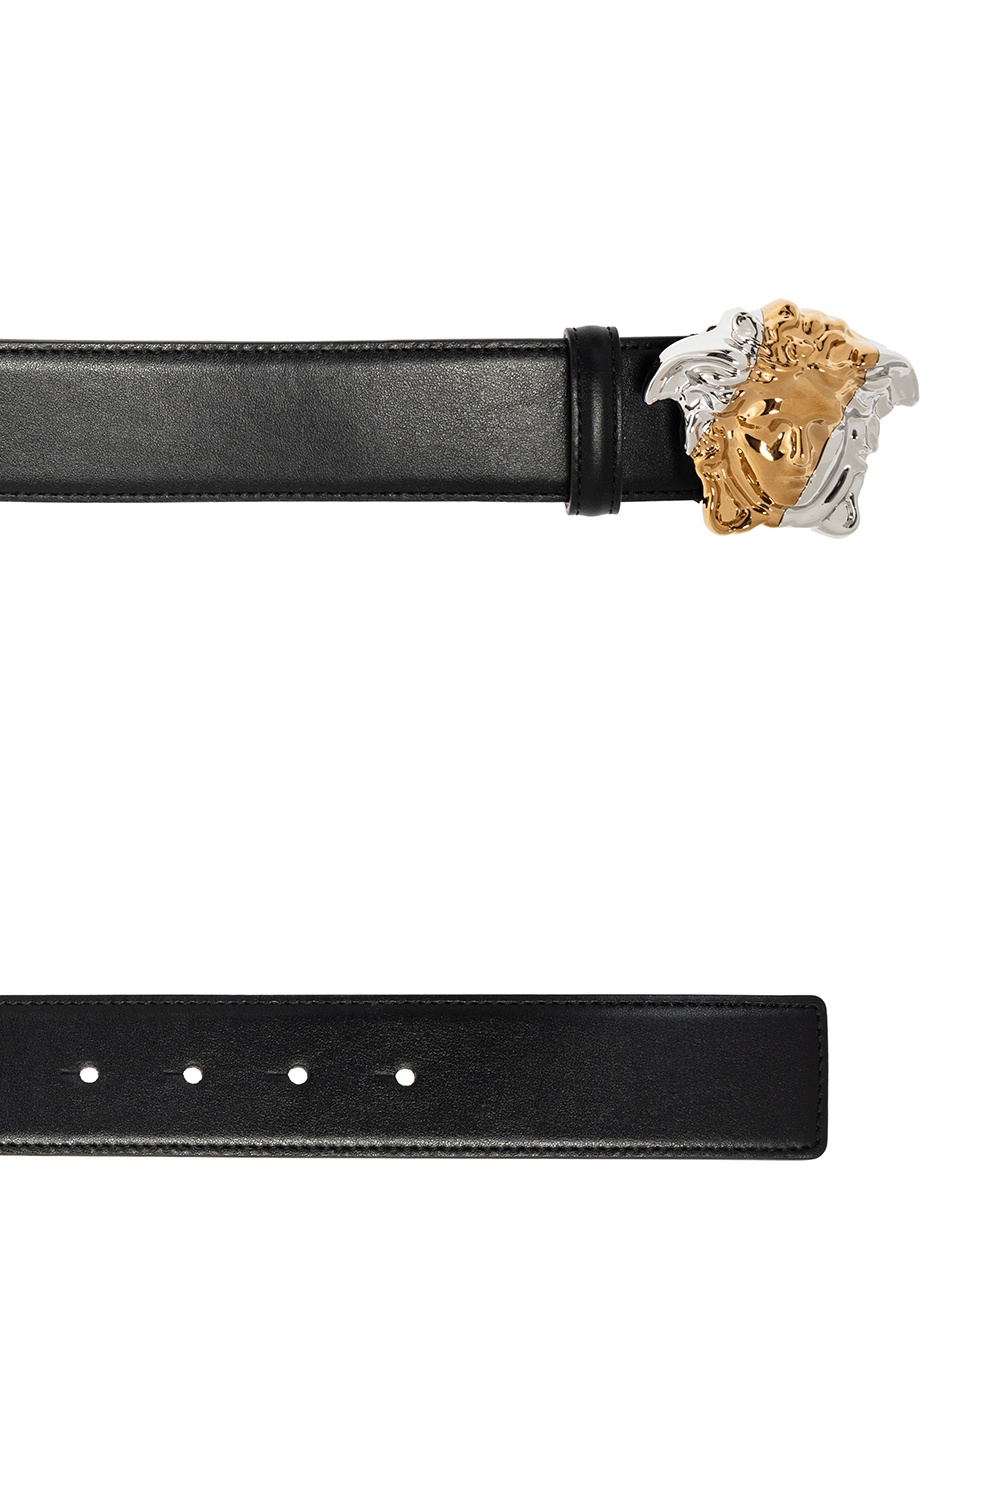 Versace Appliquéd belt